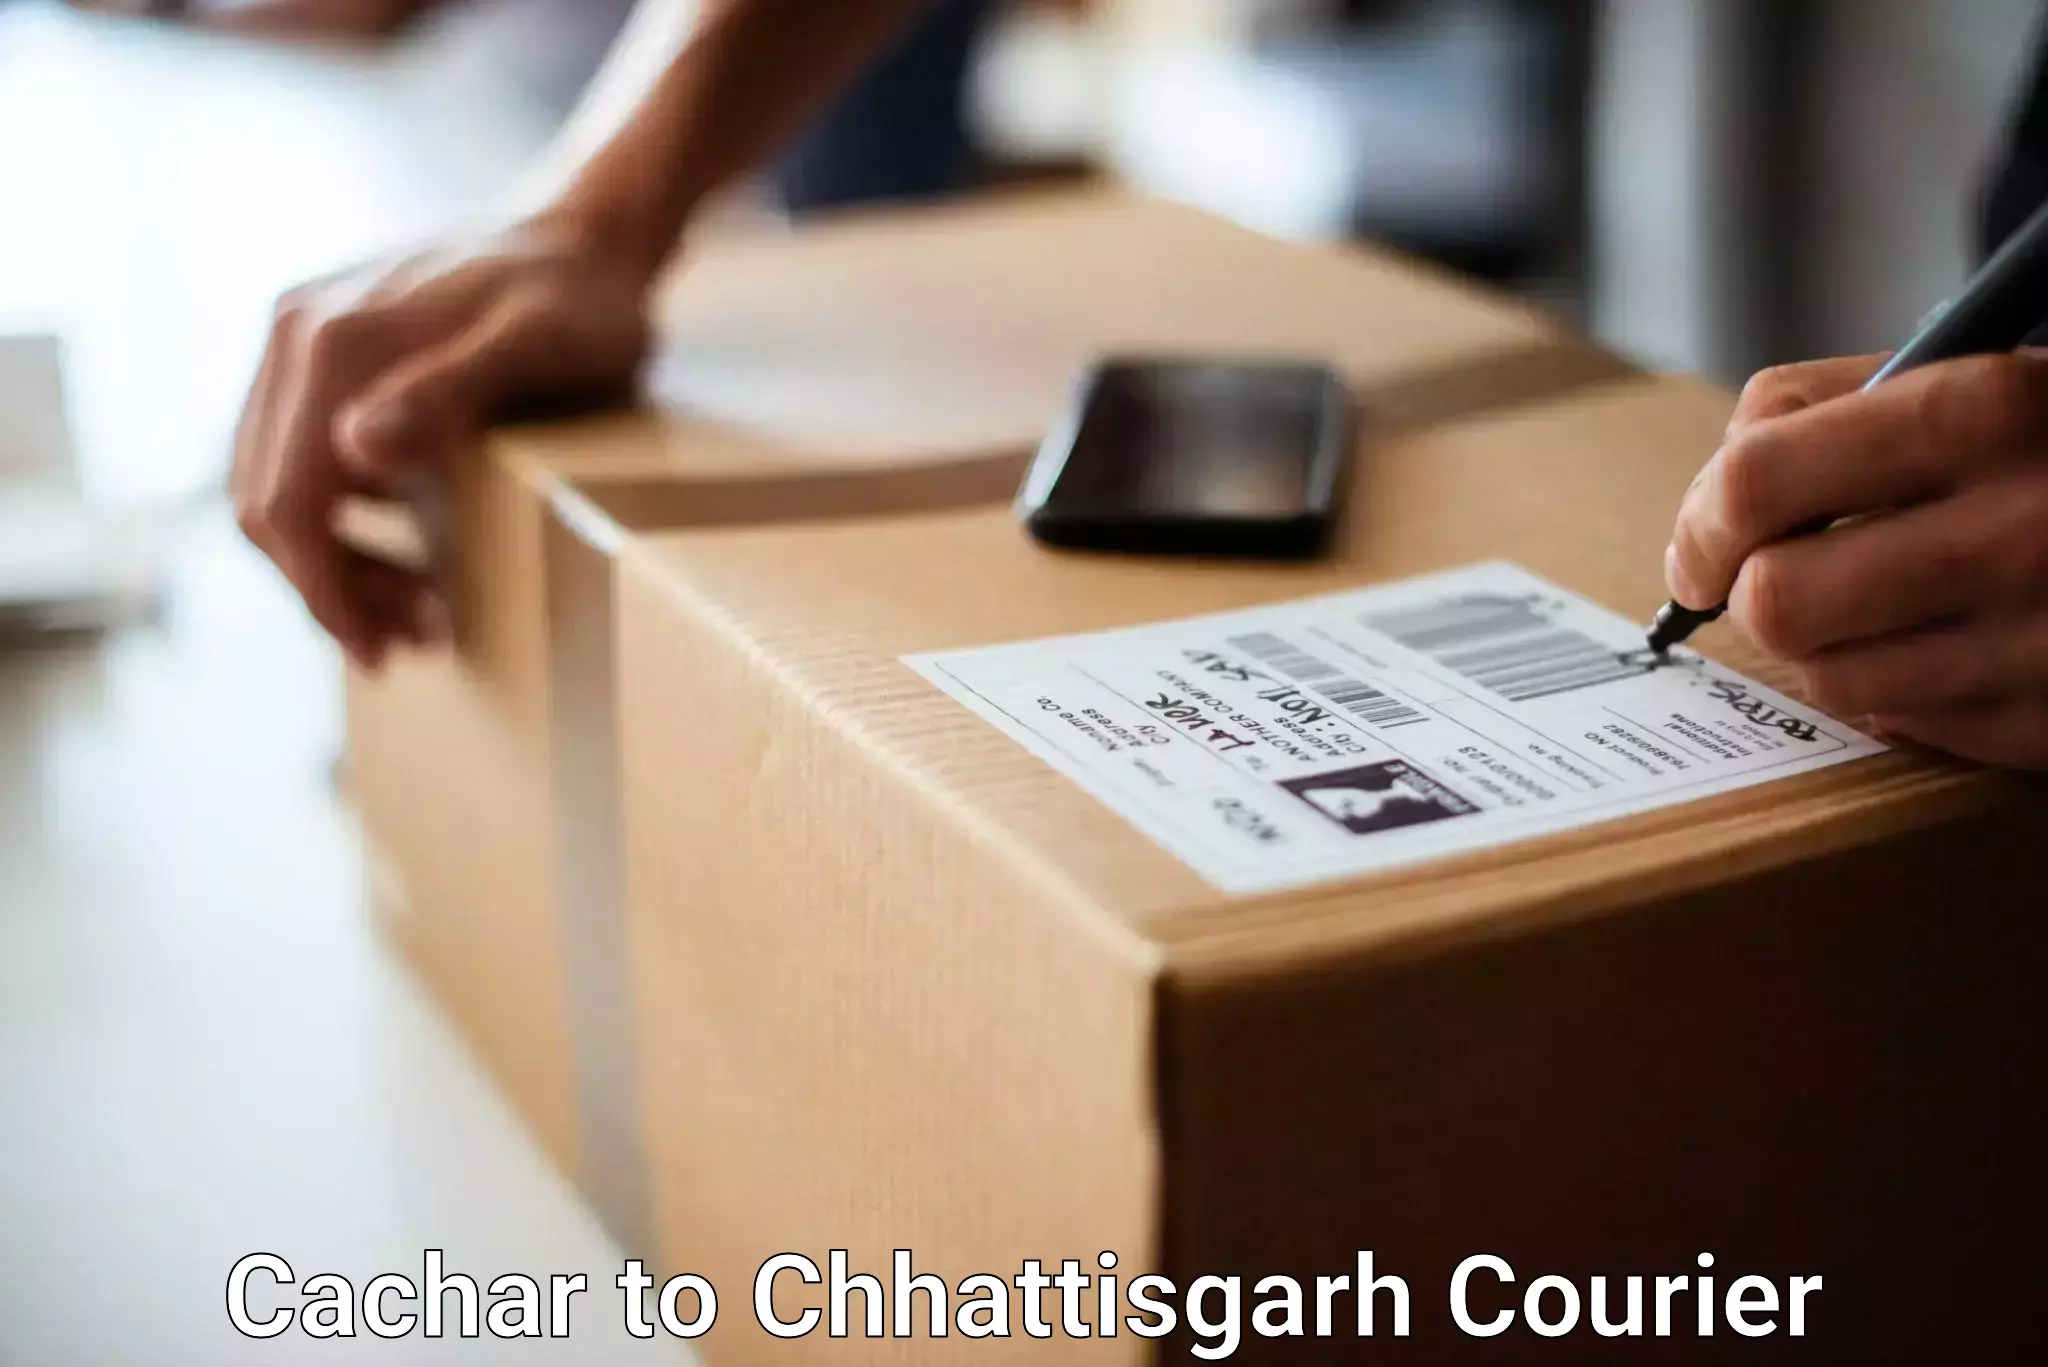 Personal effects shipping Cachar to Korea Chhattisgarh